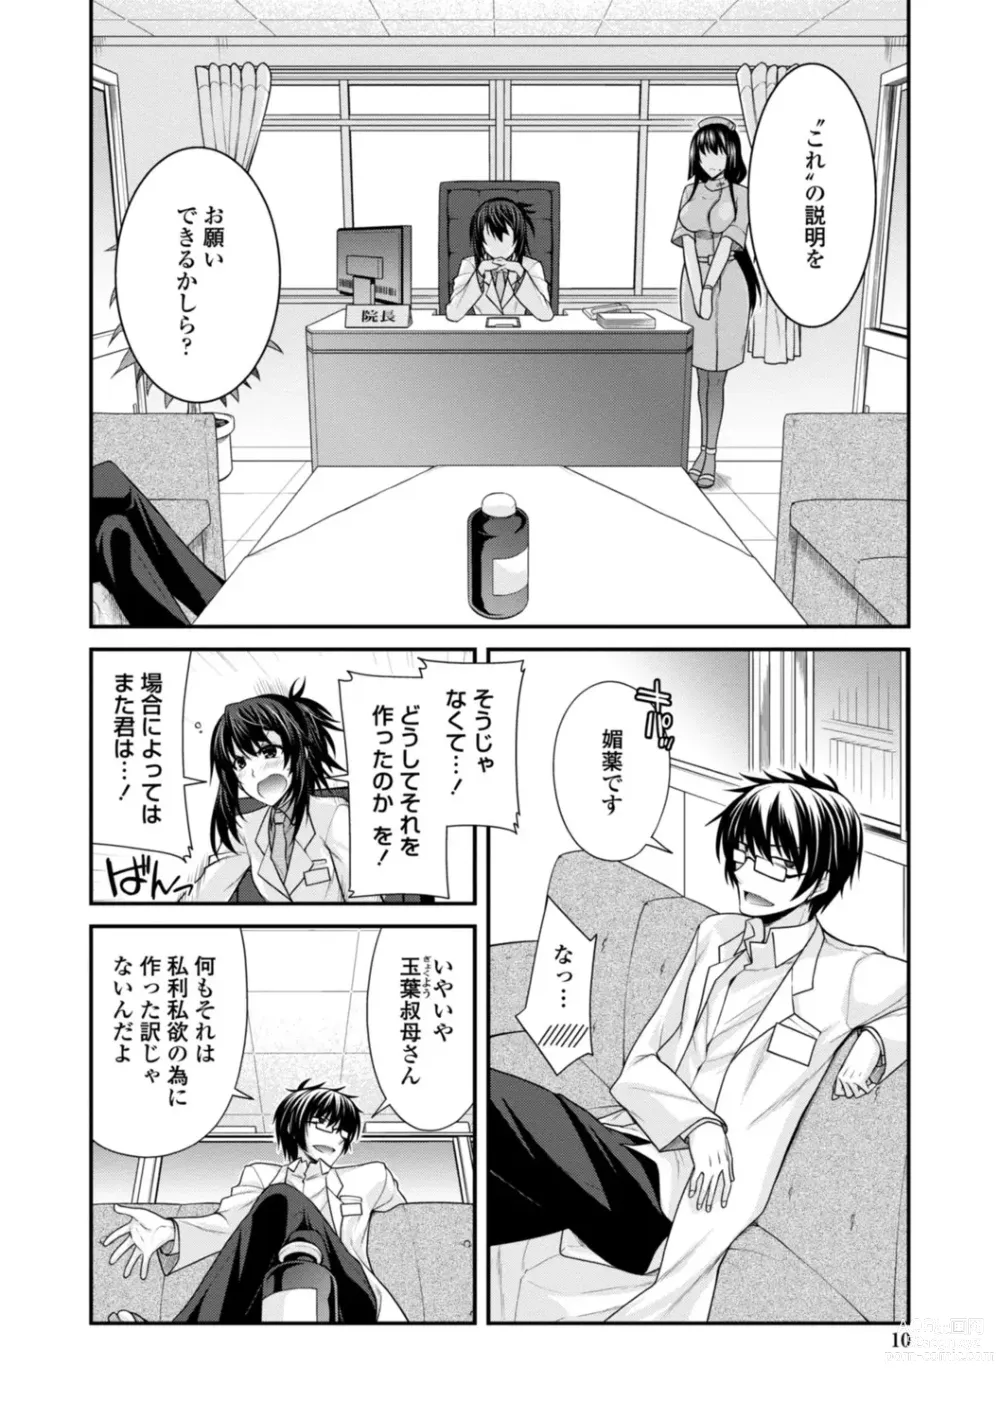 Page 10 of manga Shiri chichi midara